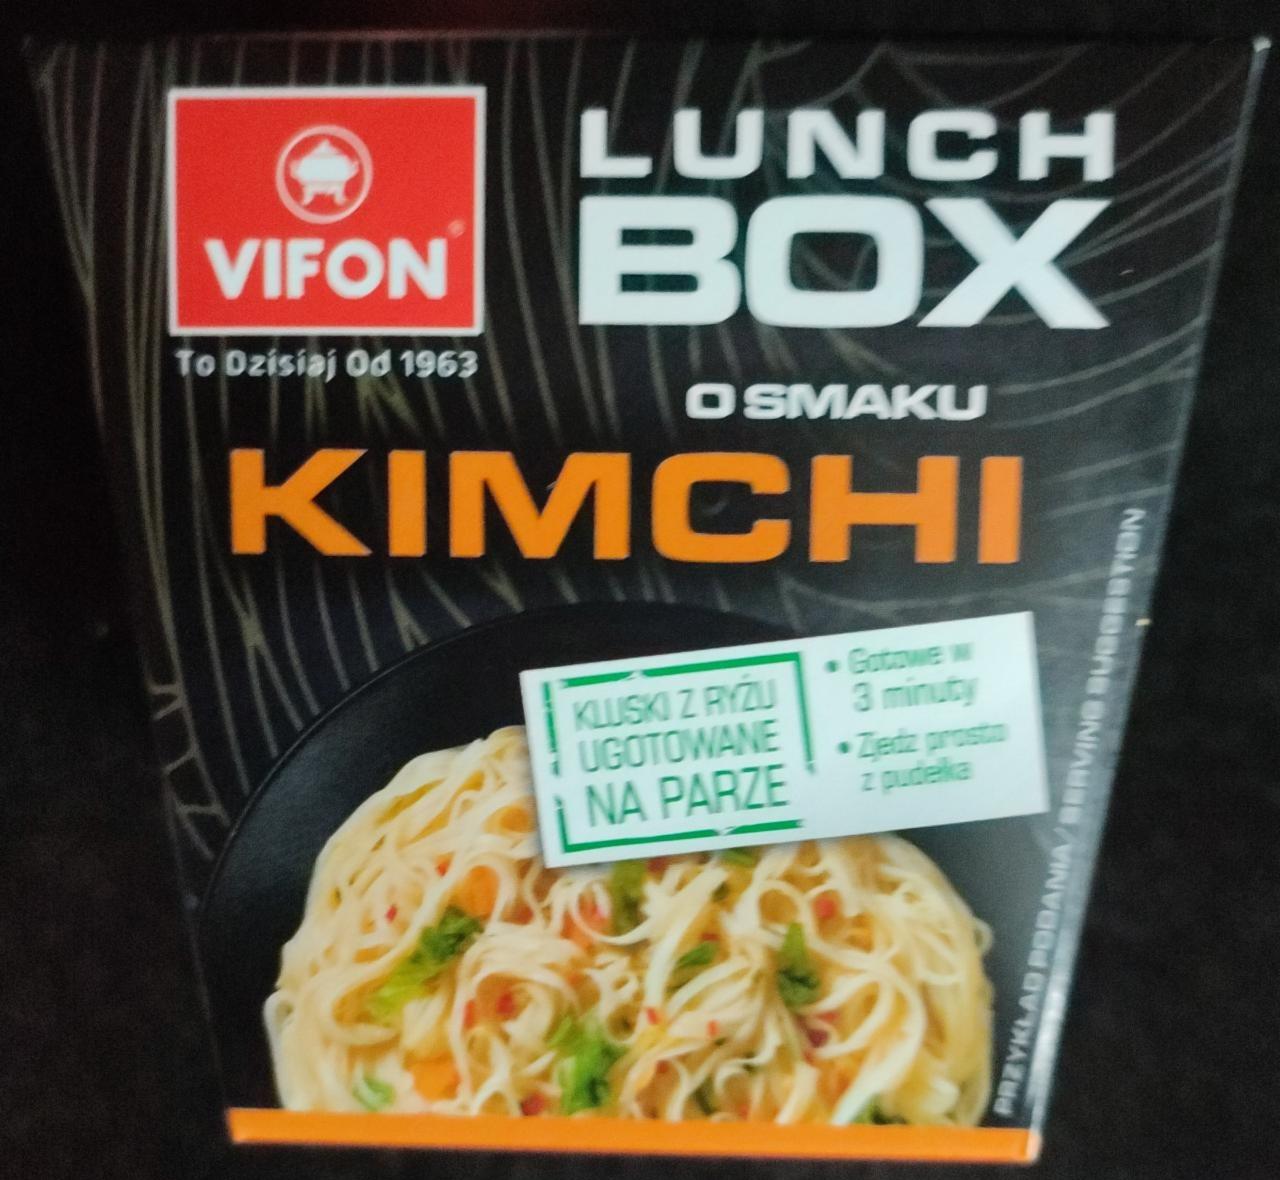 Zdjęcia - Lunch box o smaku kimchi VIFON